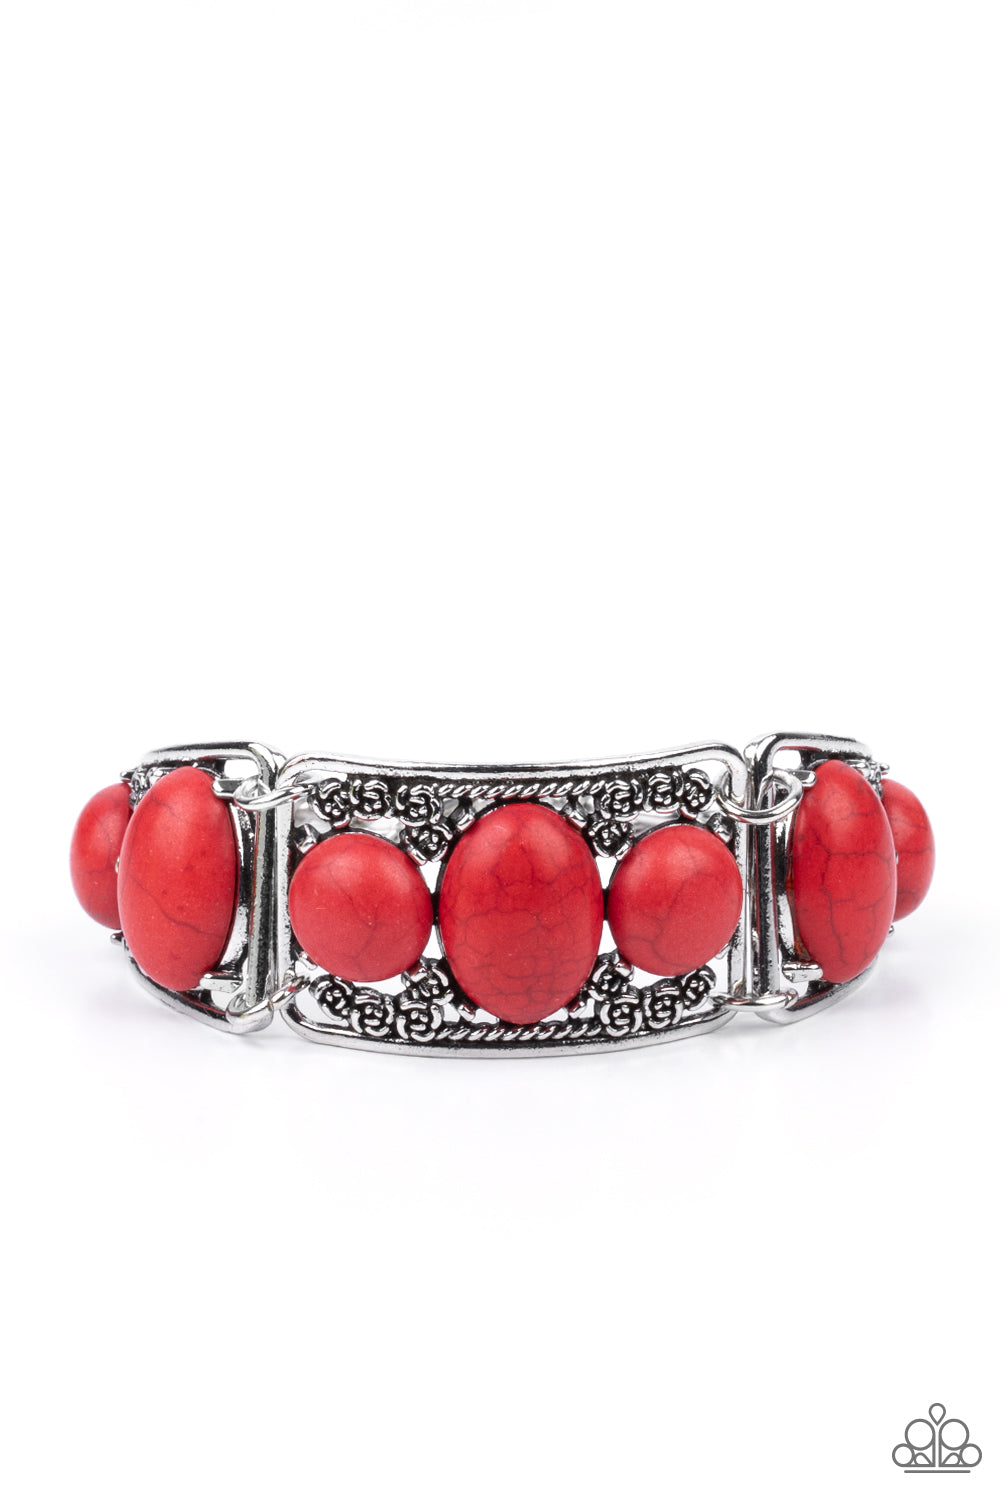 Southern Splendor - Red bracelet 778